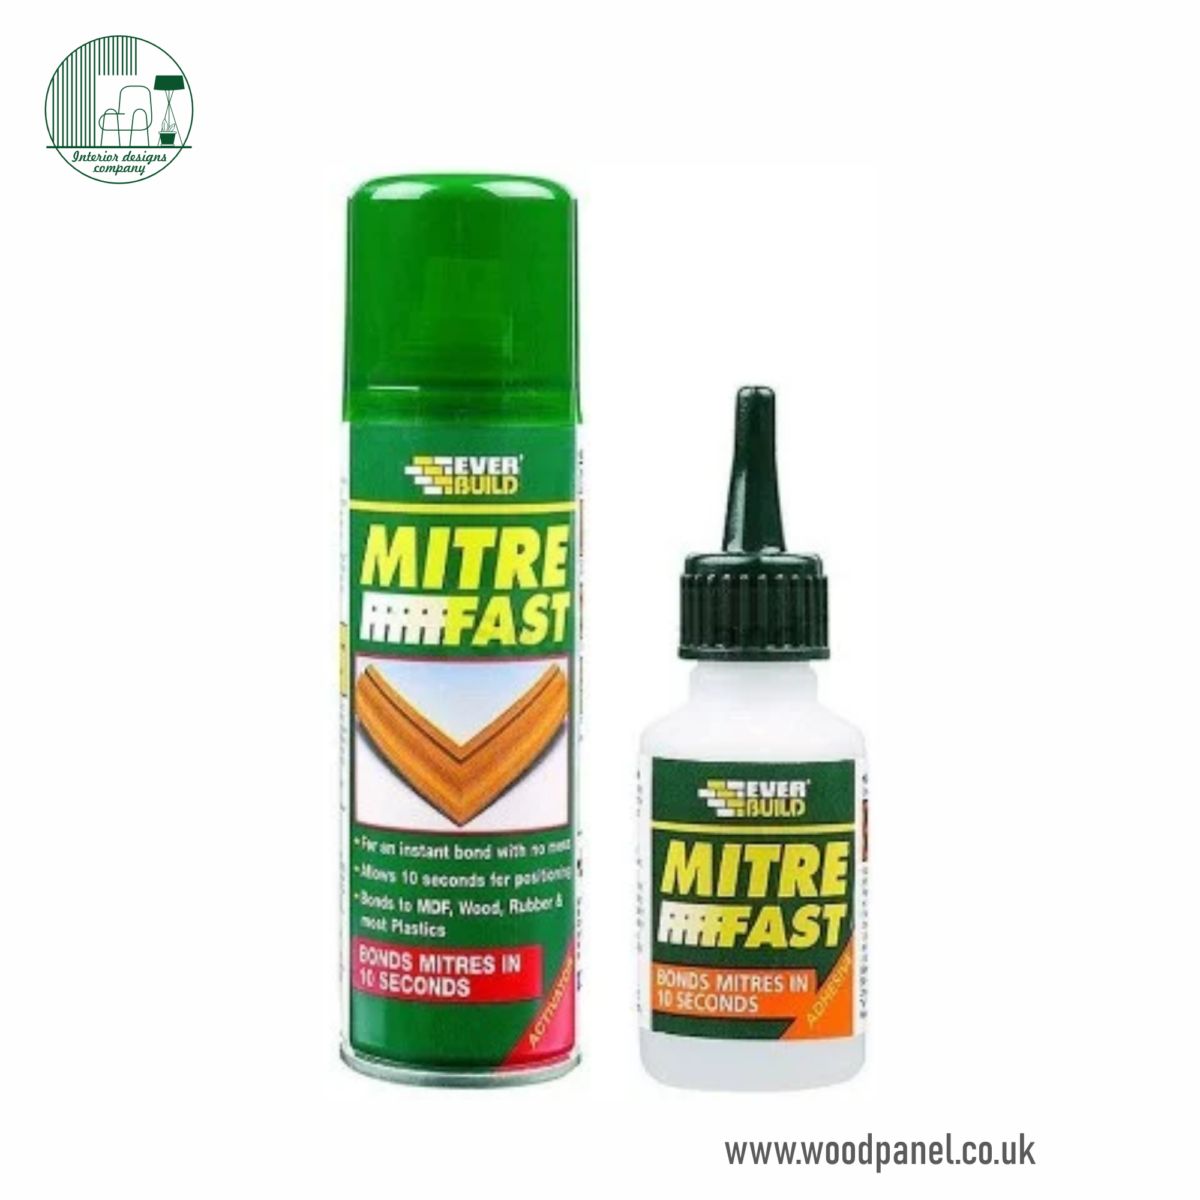 MitreFast Ever Build Mitre Fast Bonding Kit - Glue and Activator 50g